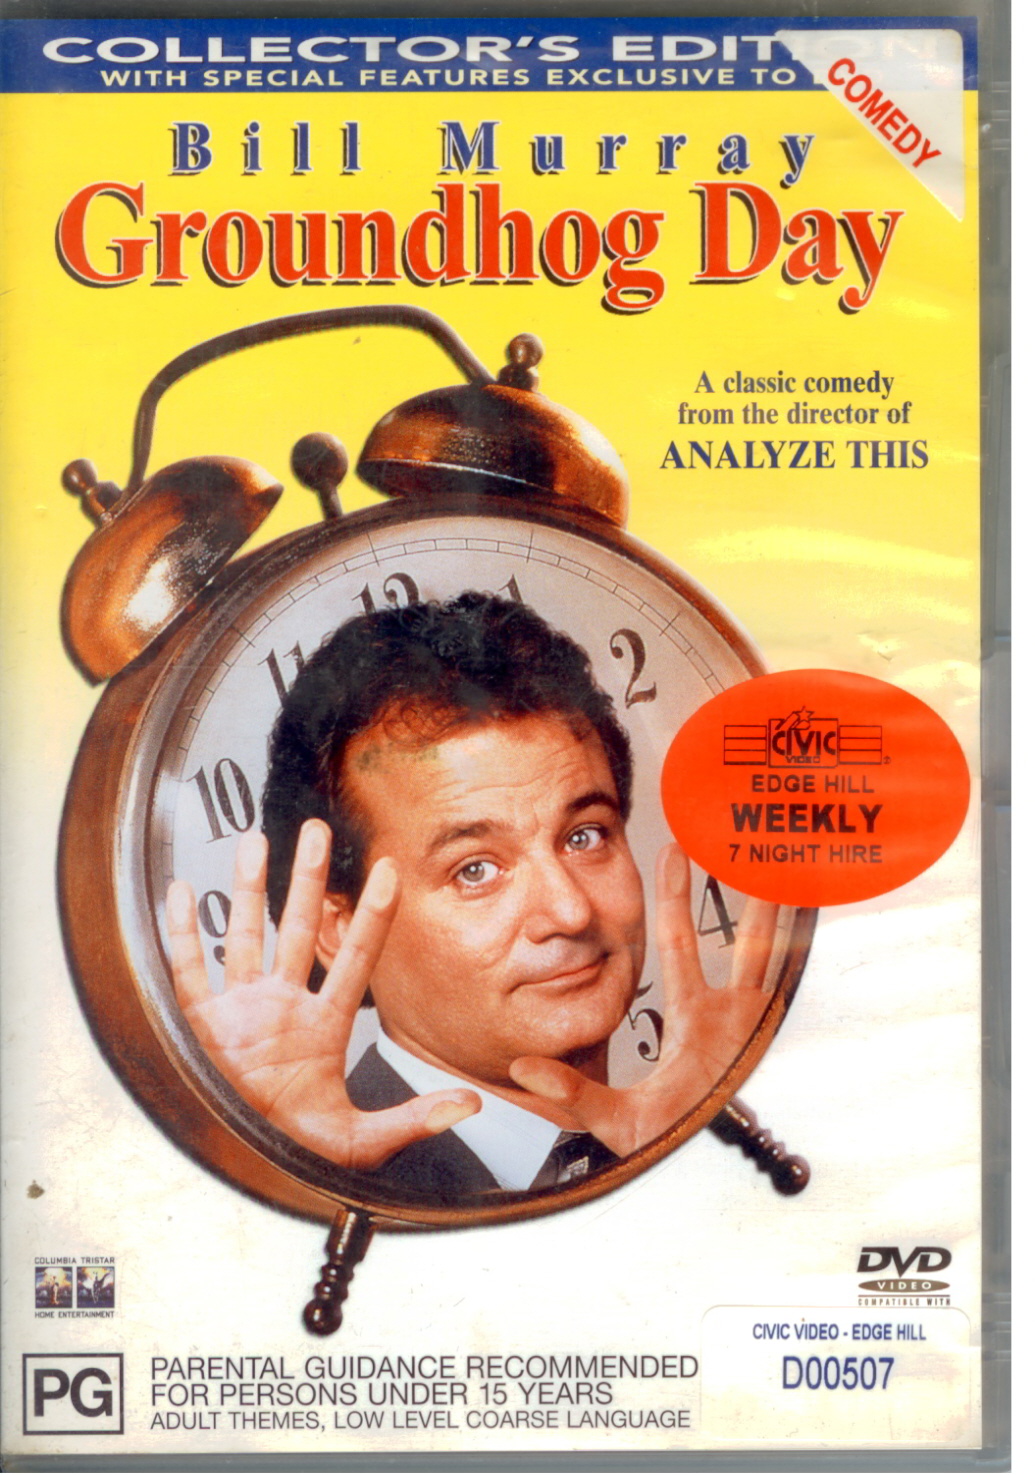 [Groundhog+Day.jpg]